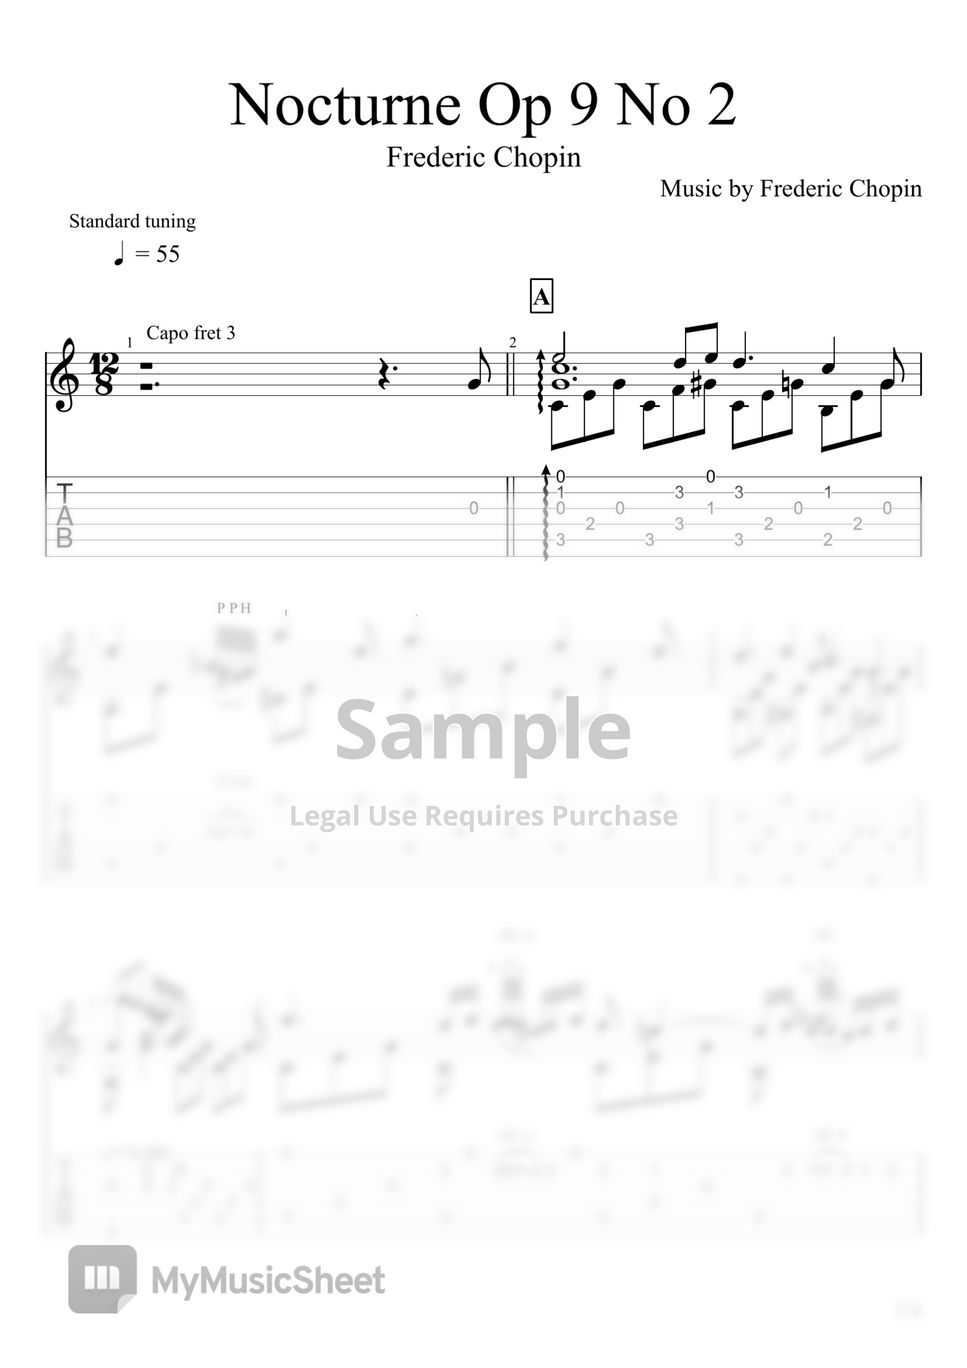 Chopin - Nocturne Op 9 No 2 (Fingerstyle) by u3danchou